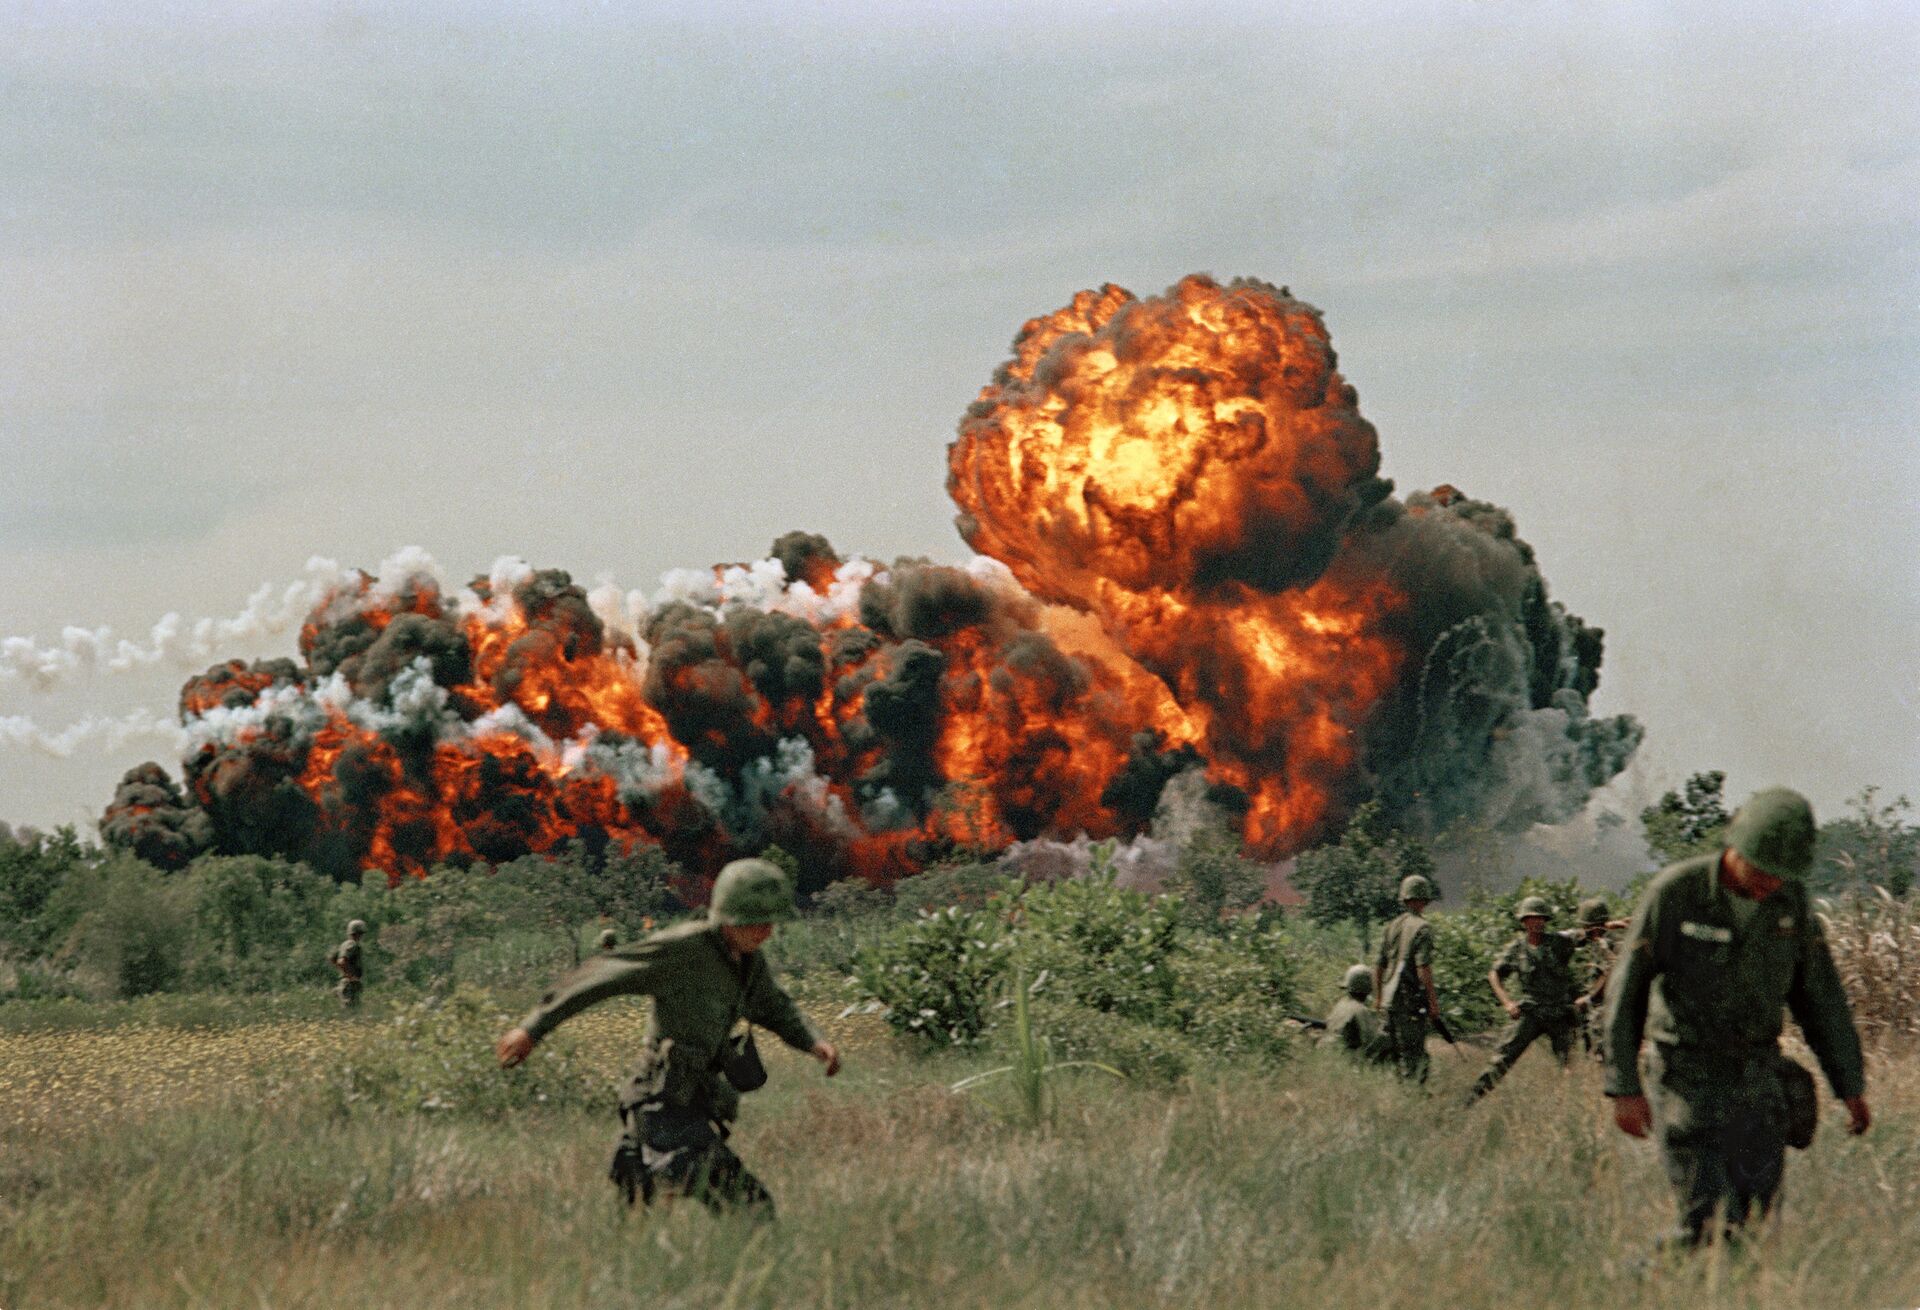 A napalm strike erupts in a fireball near U.S. troops on patrol in South Vietnam, 1966 during the Vietnam War - Sputnik International, 1920, 25.10.2022